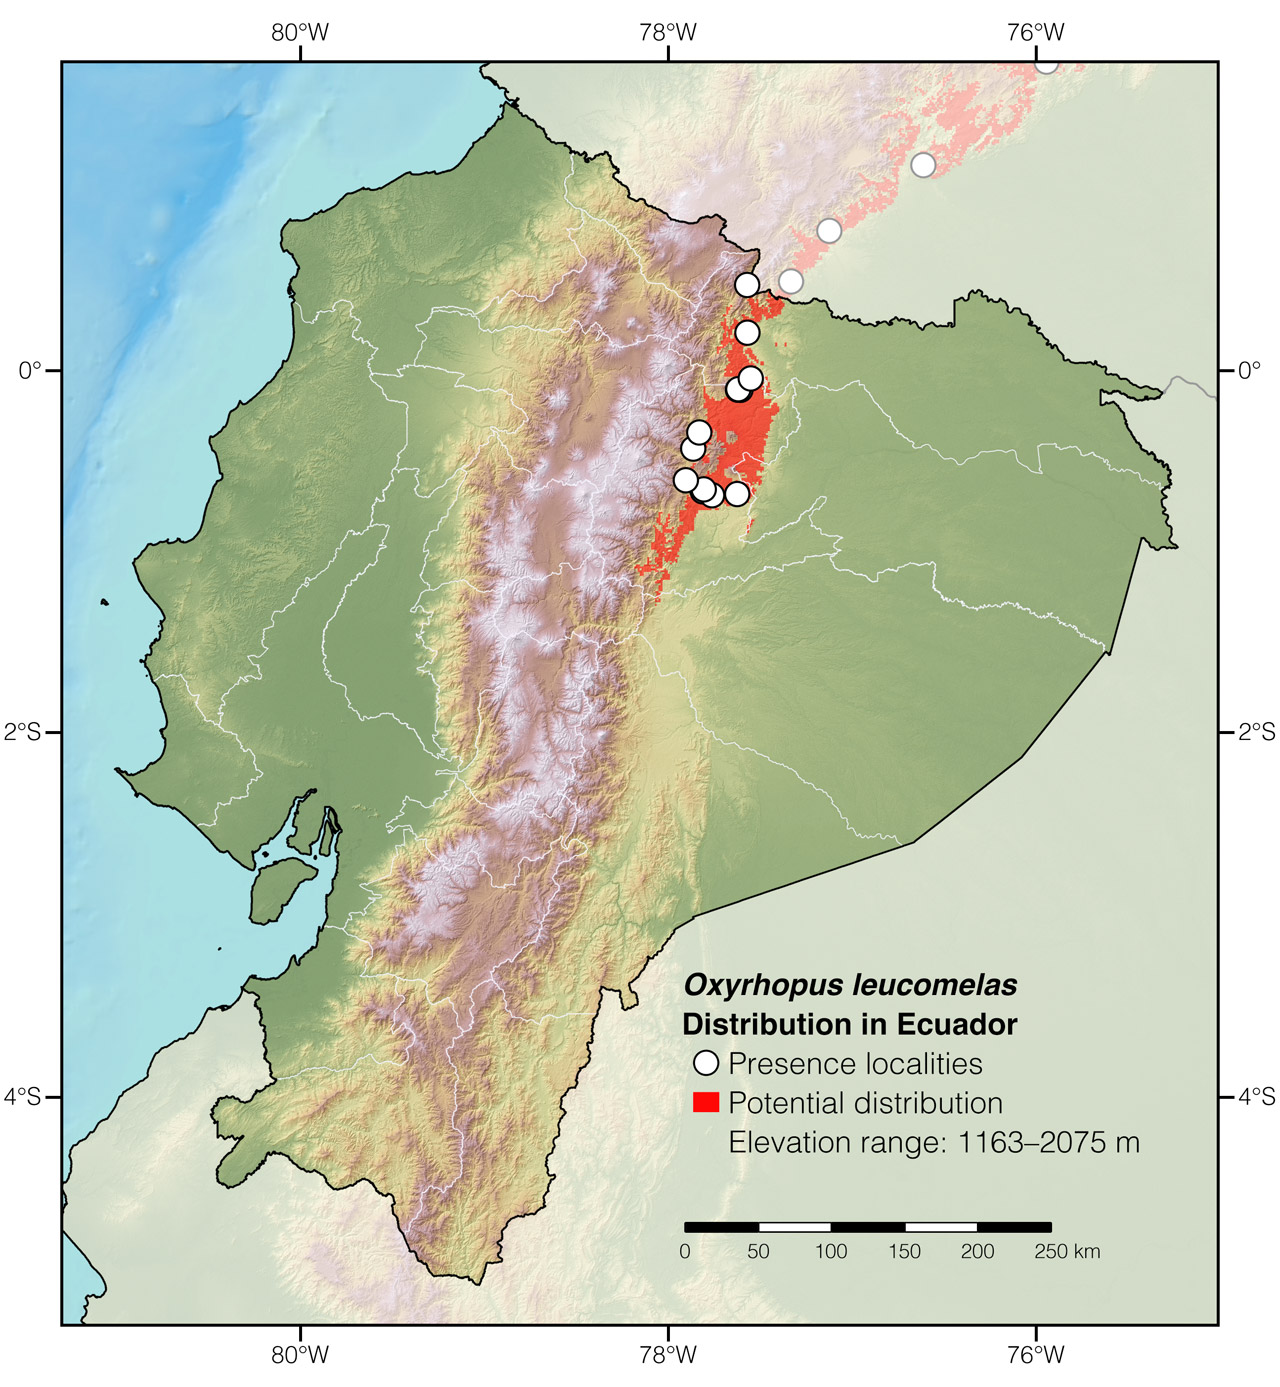 Distribution of Oxyrhopus leucomelas in Ecuador